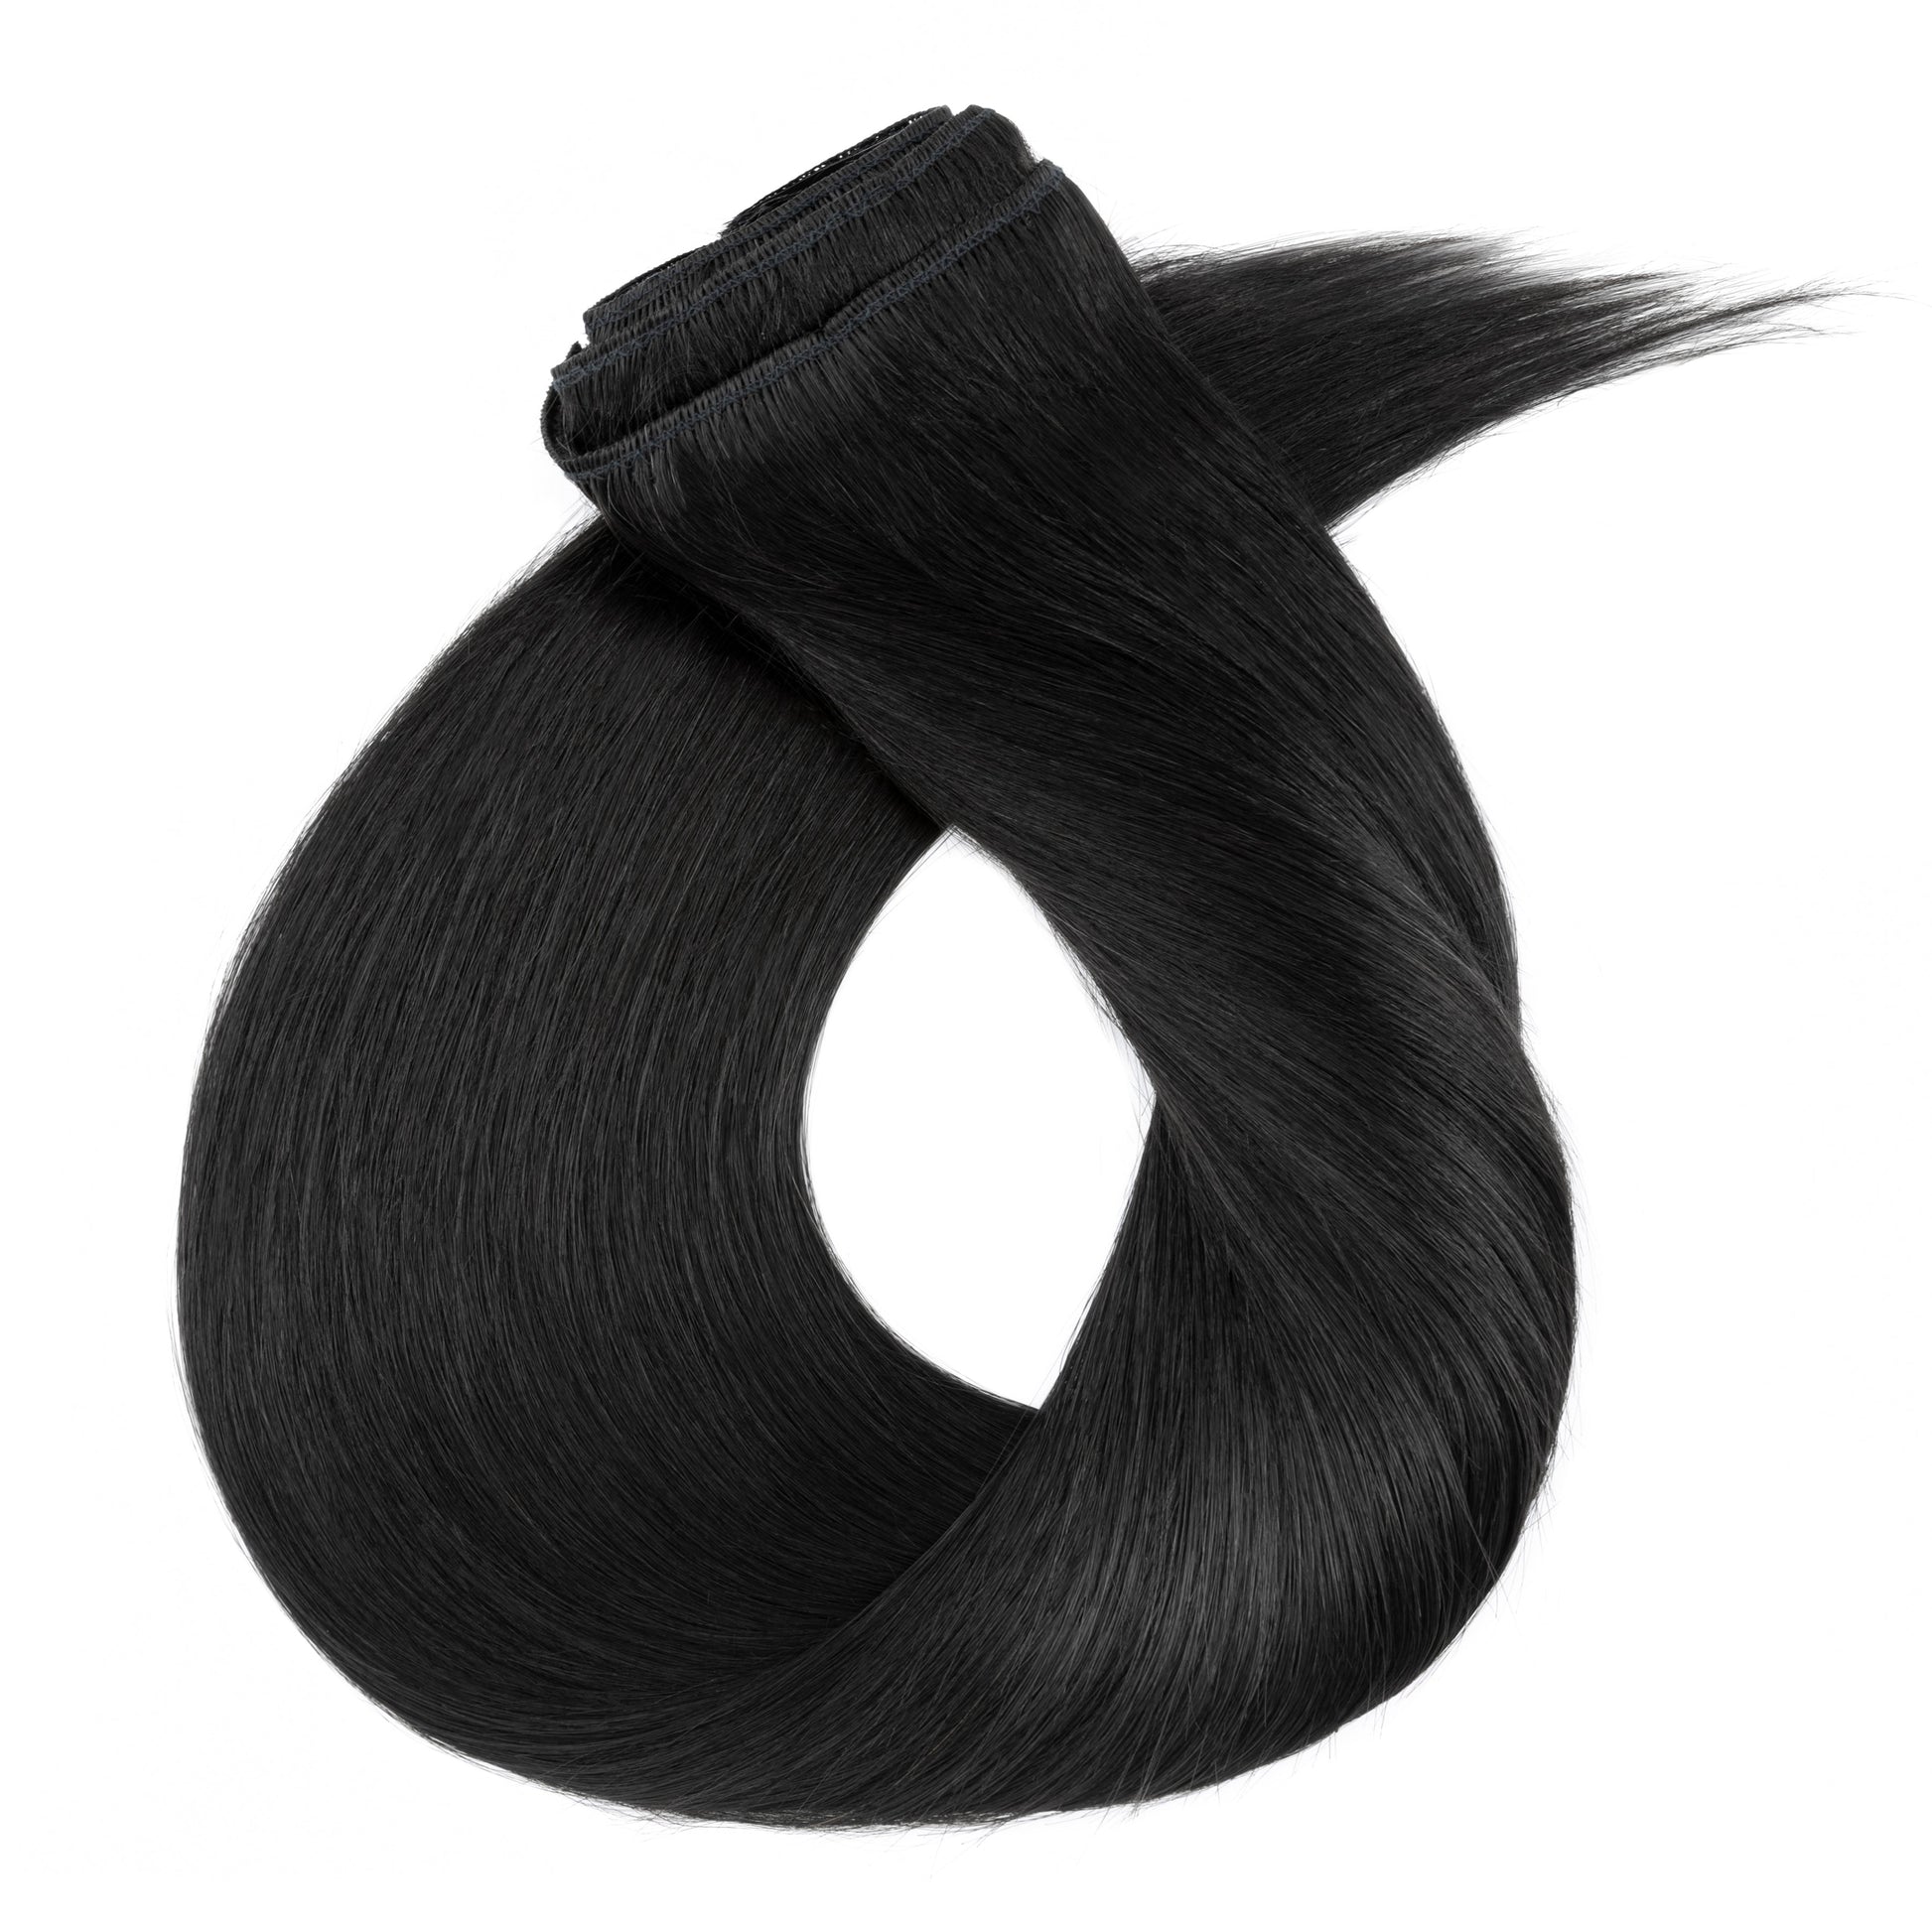 SEGOHAIR 8pcs Clip In Hair Extensions Real Human Hair Jet Black segohair.com